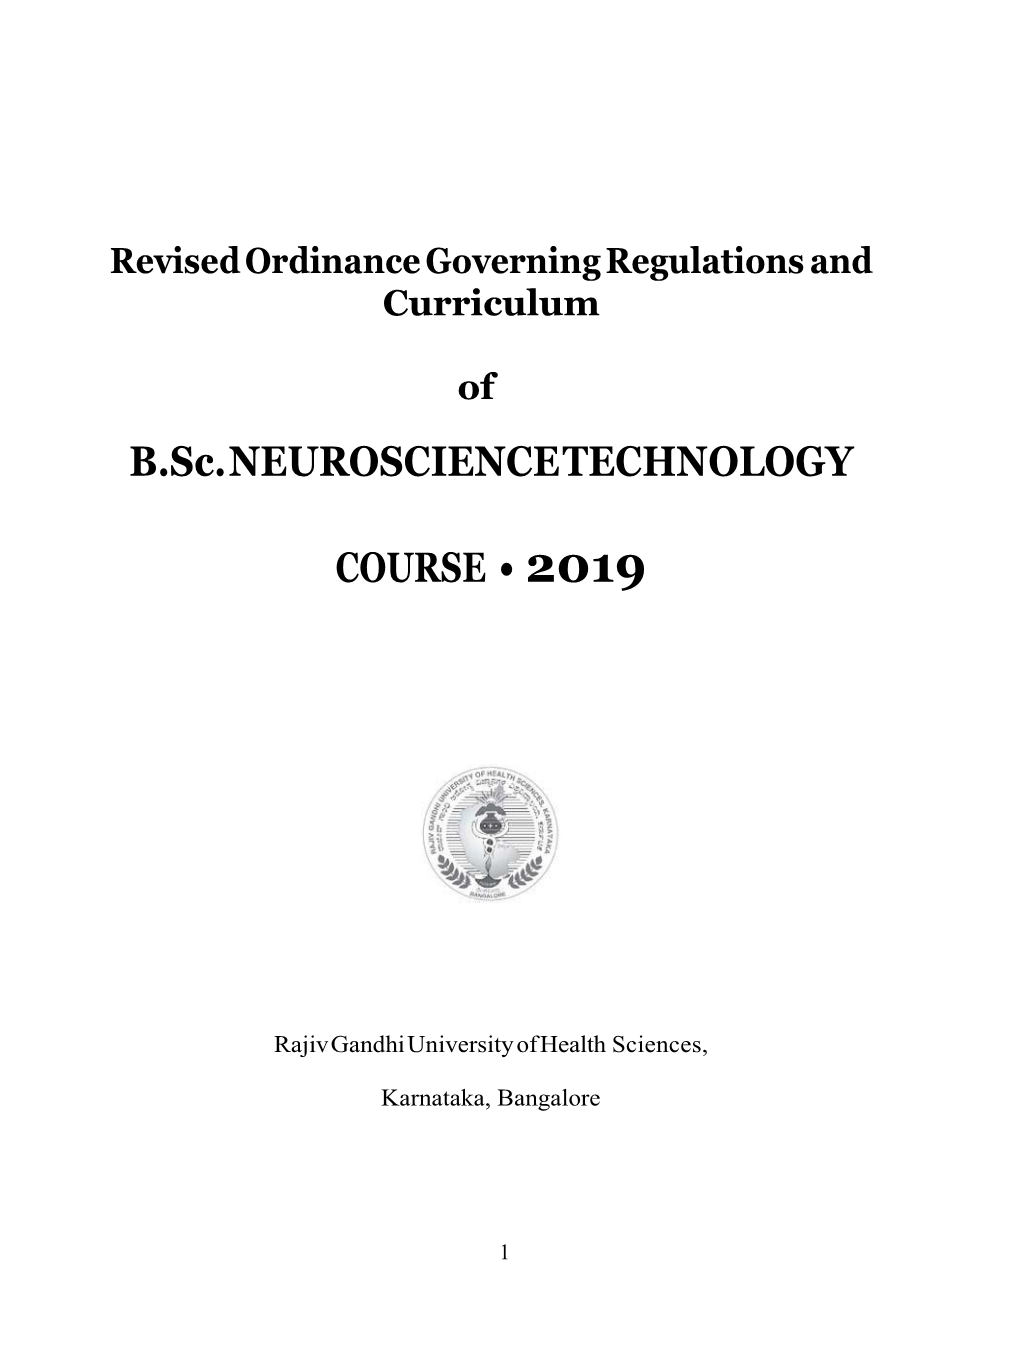 B.Sc. NEUROSCIENCE TECHNOLOGY COURSE • 2019